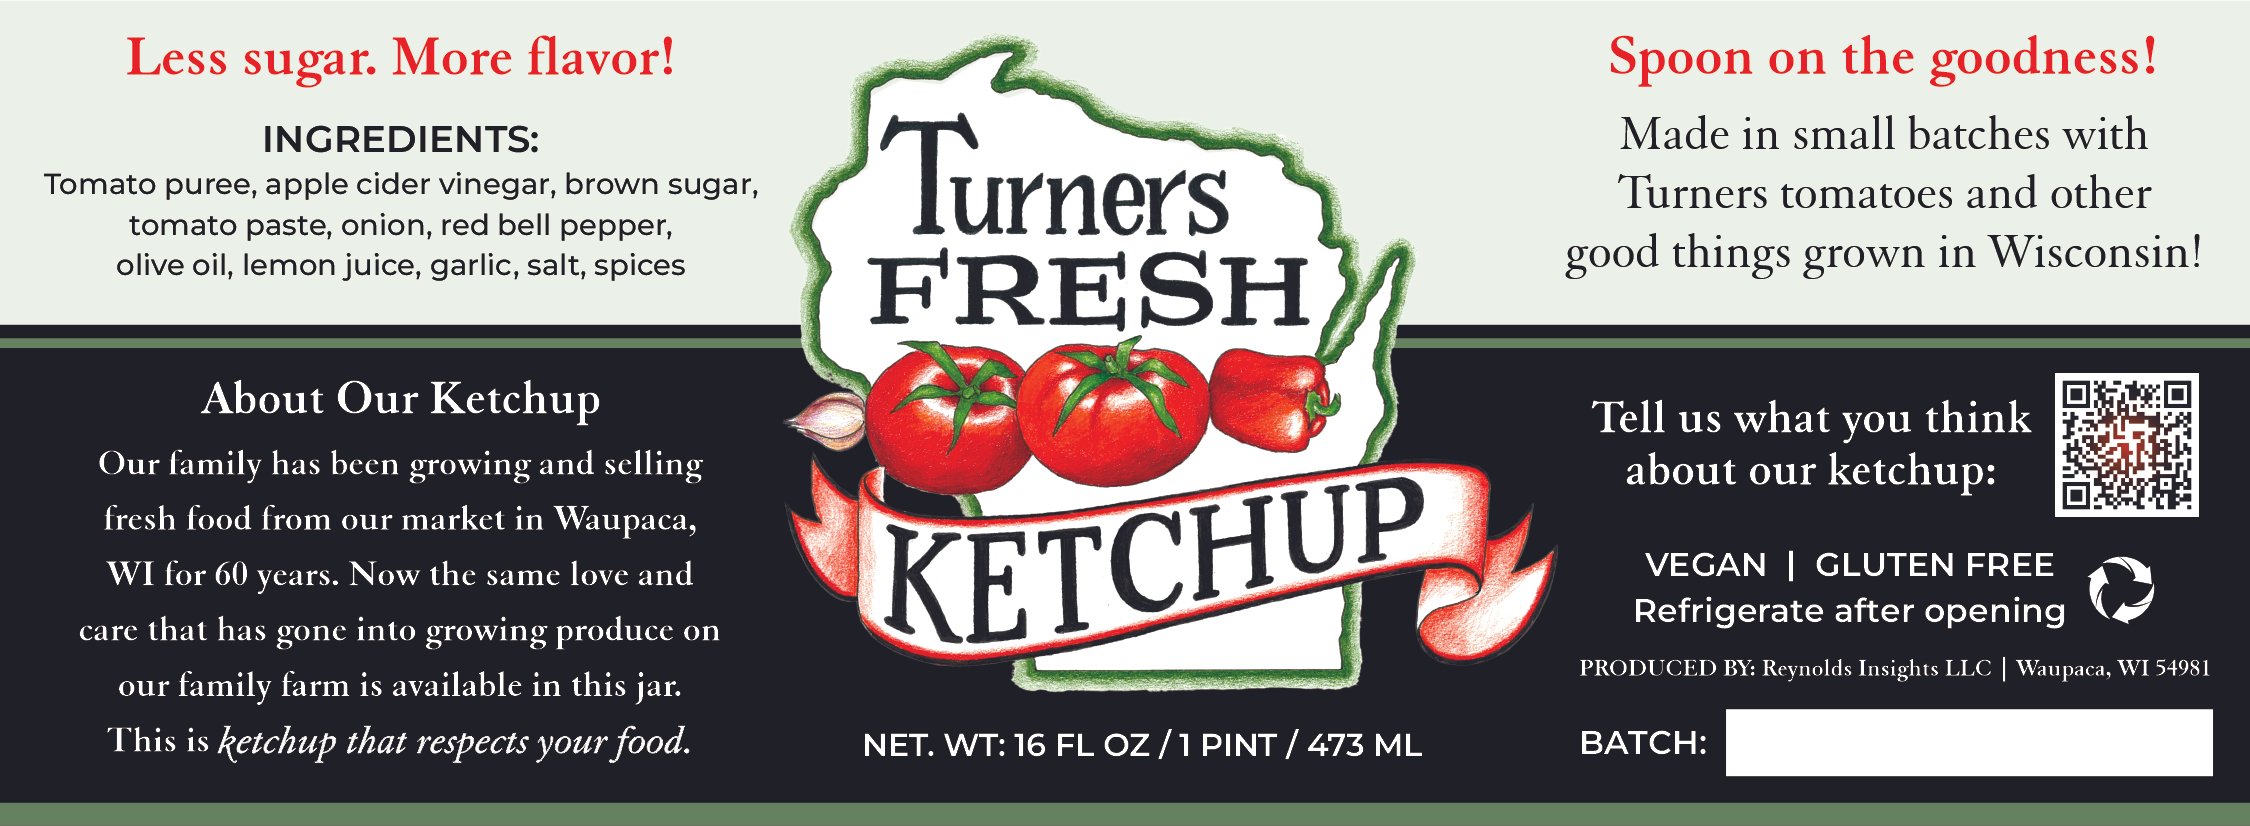 Chuck Reynolds Ketchup Labels FINAL.jpg